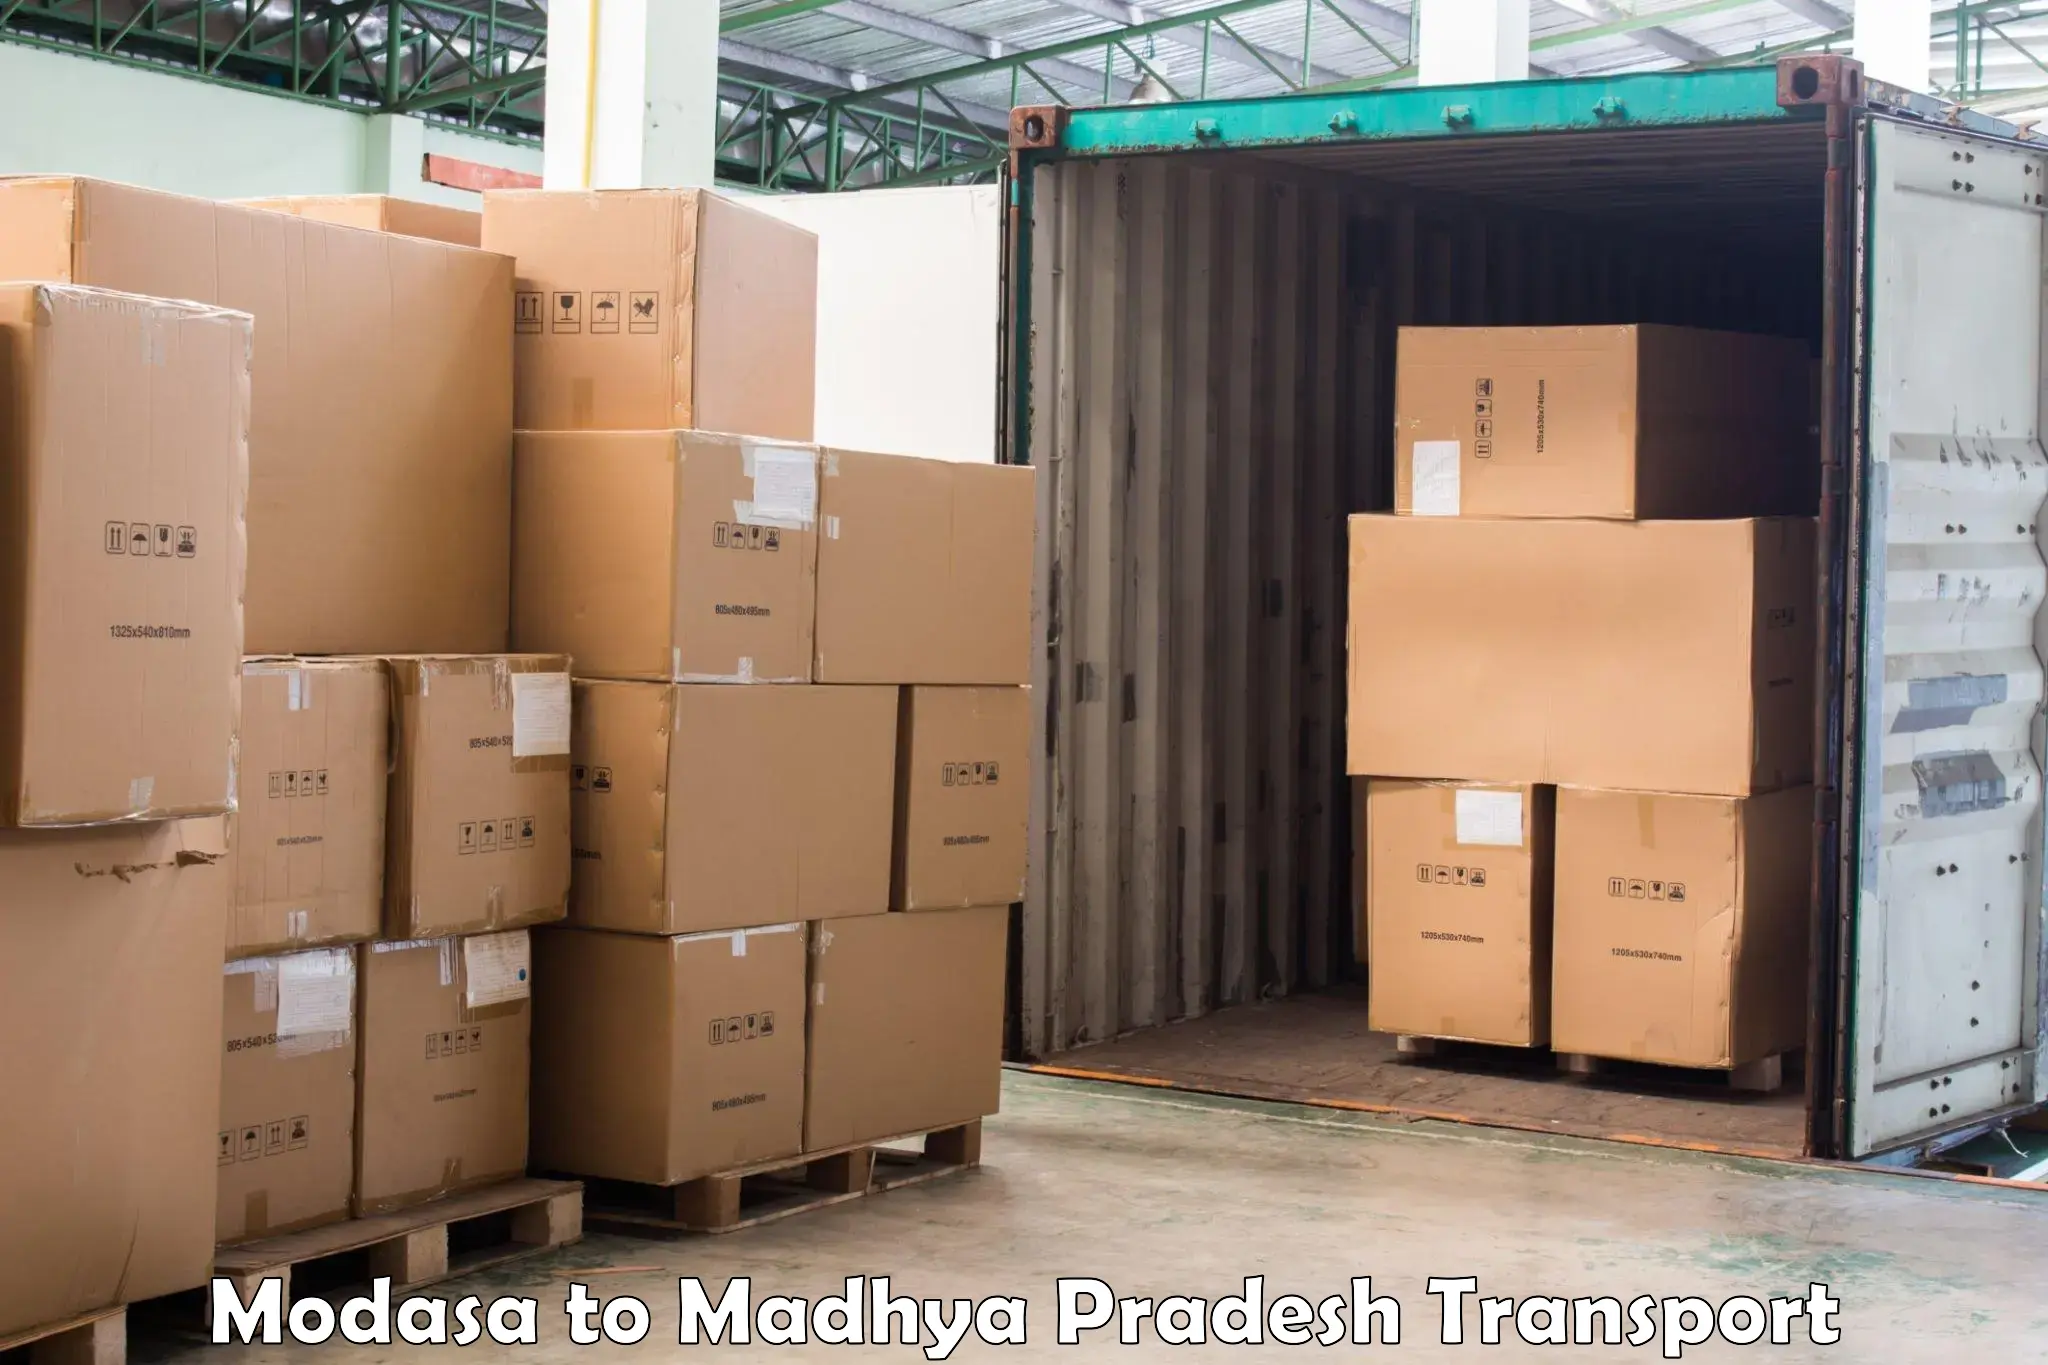 Transport in sharing Modasa to Depalpur